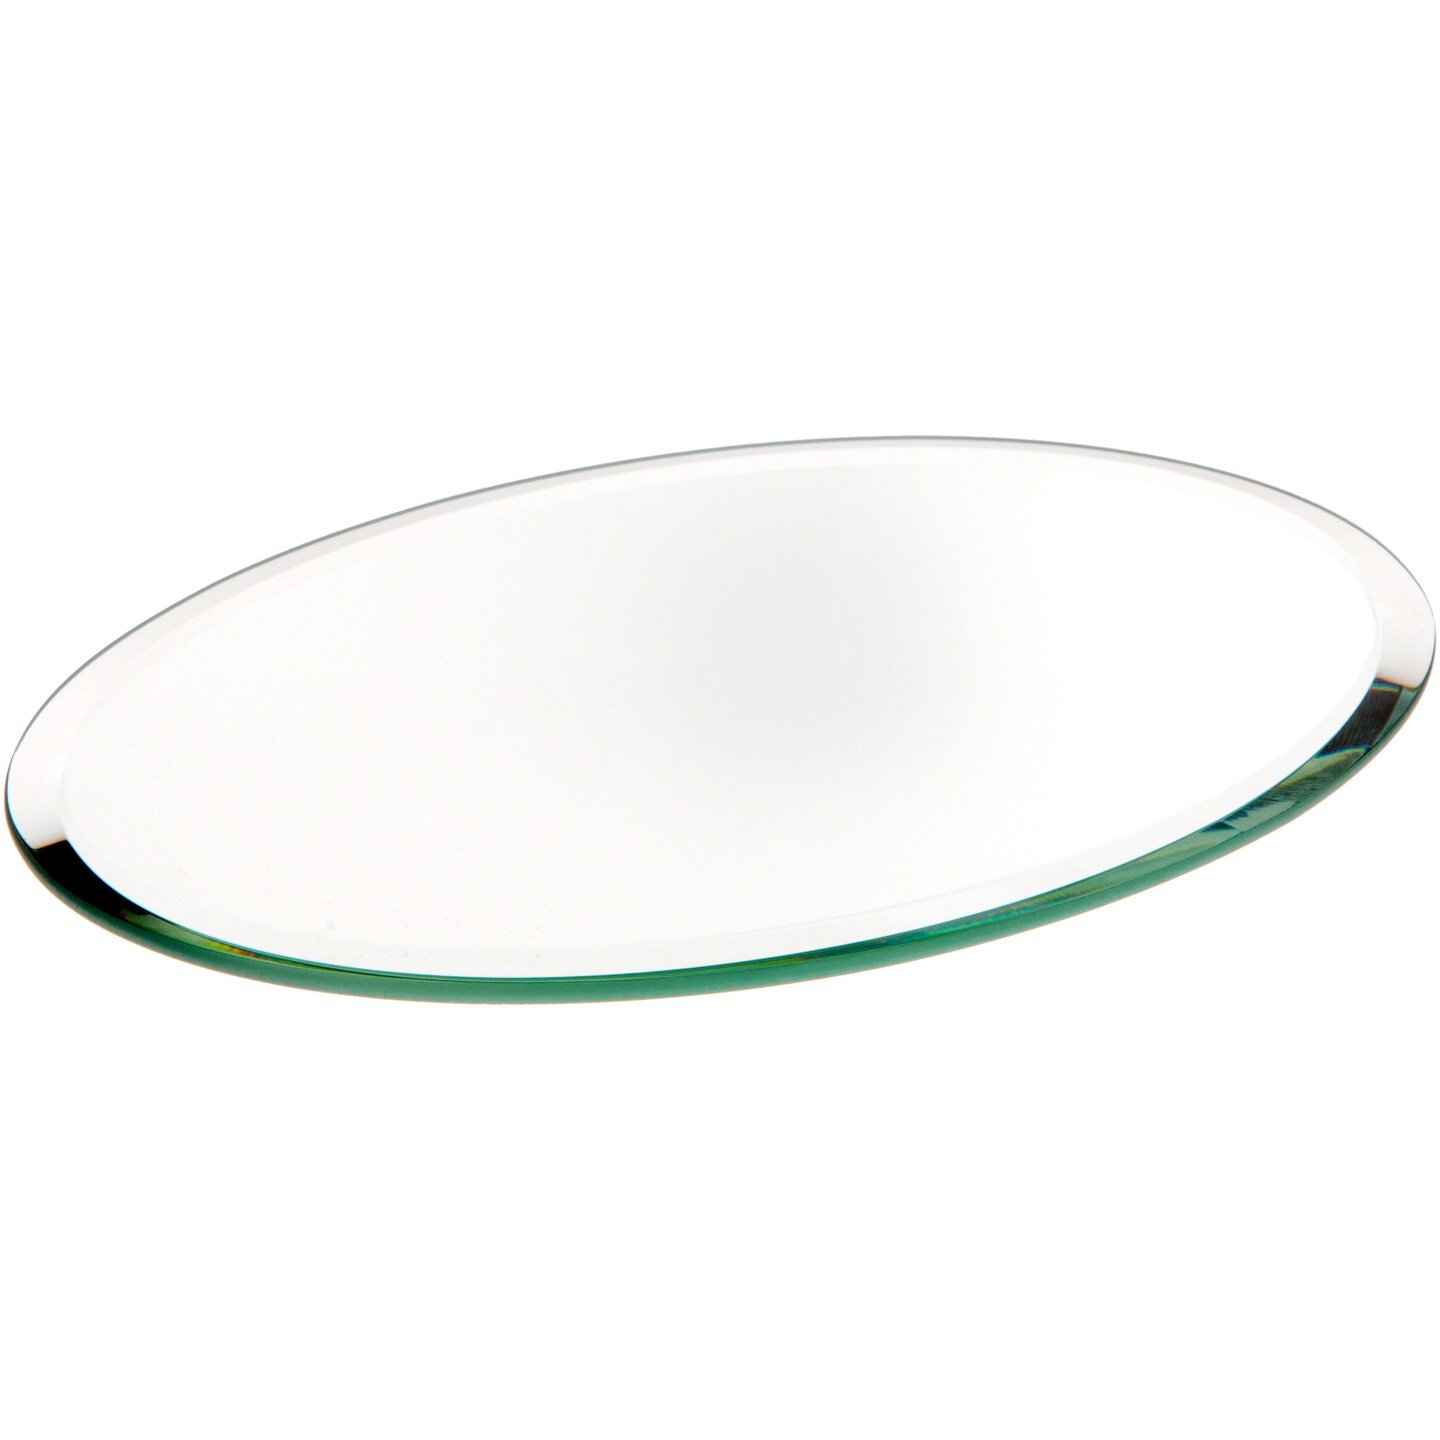 Plymor Oval 3mm Beveled Glass Mirror, 4 inch x 6 inch